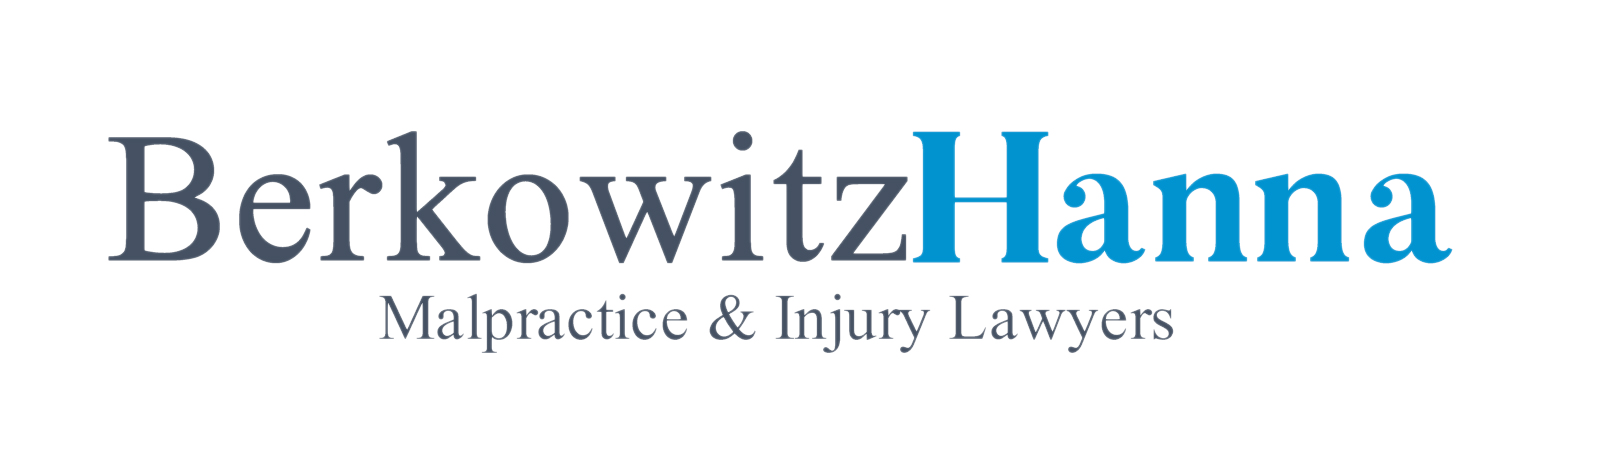 berkowitz law firm  logo